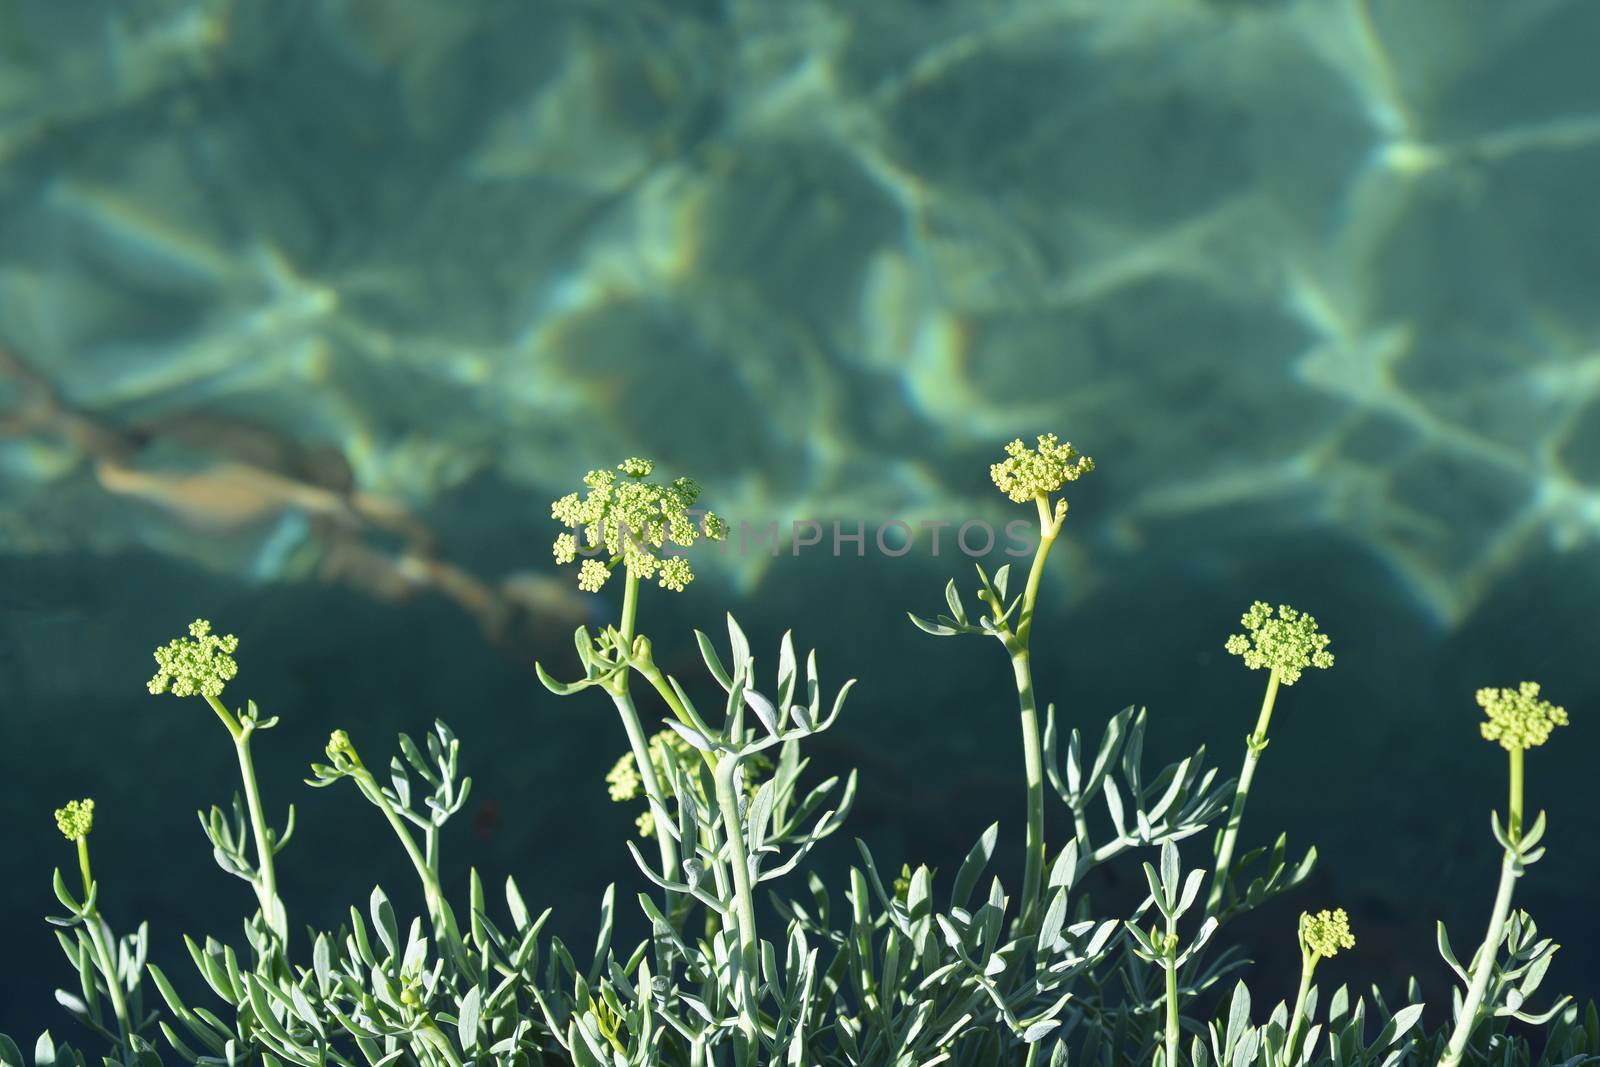 Sea fennel flowers by nahhan